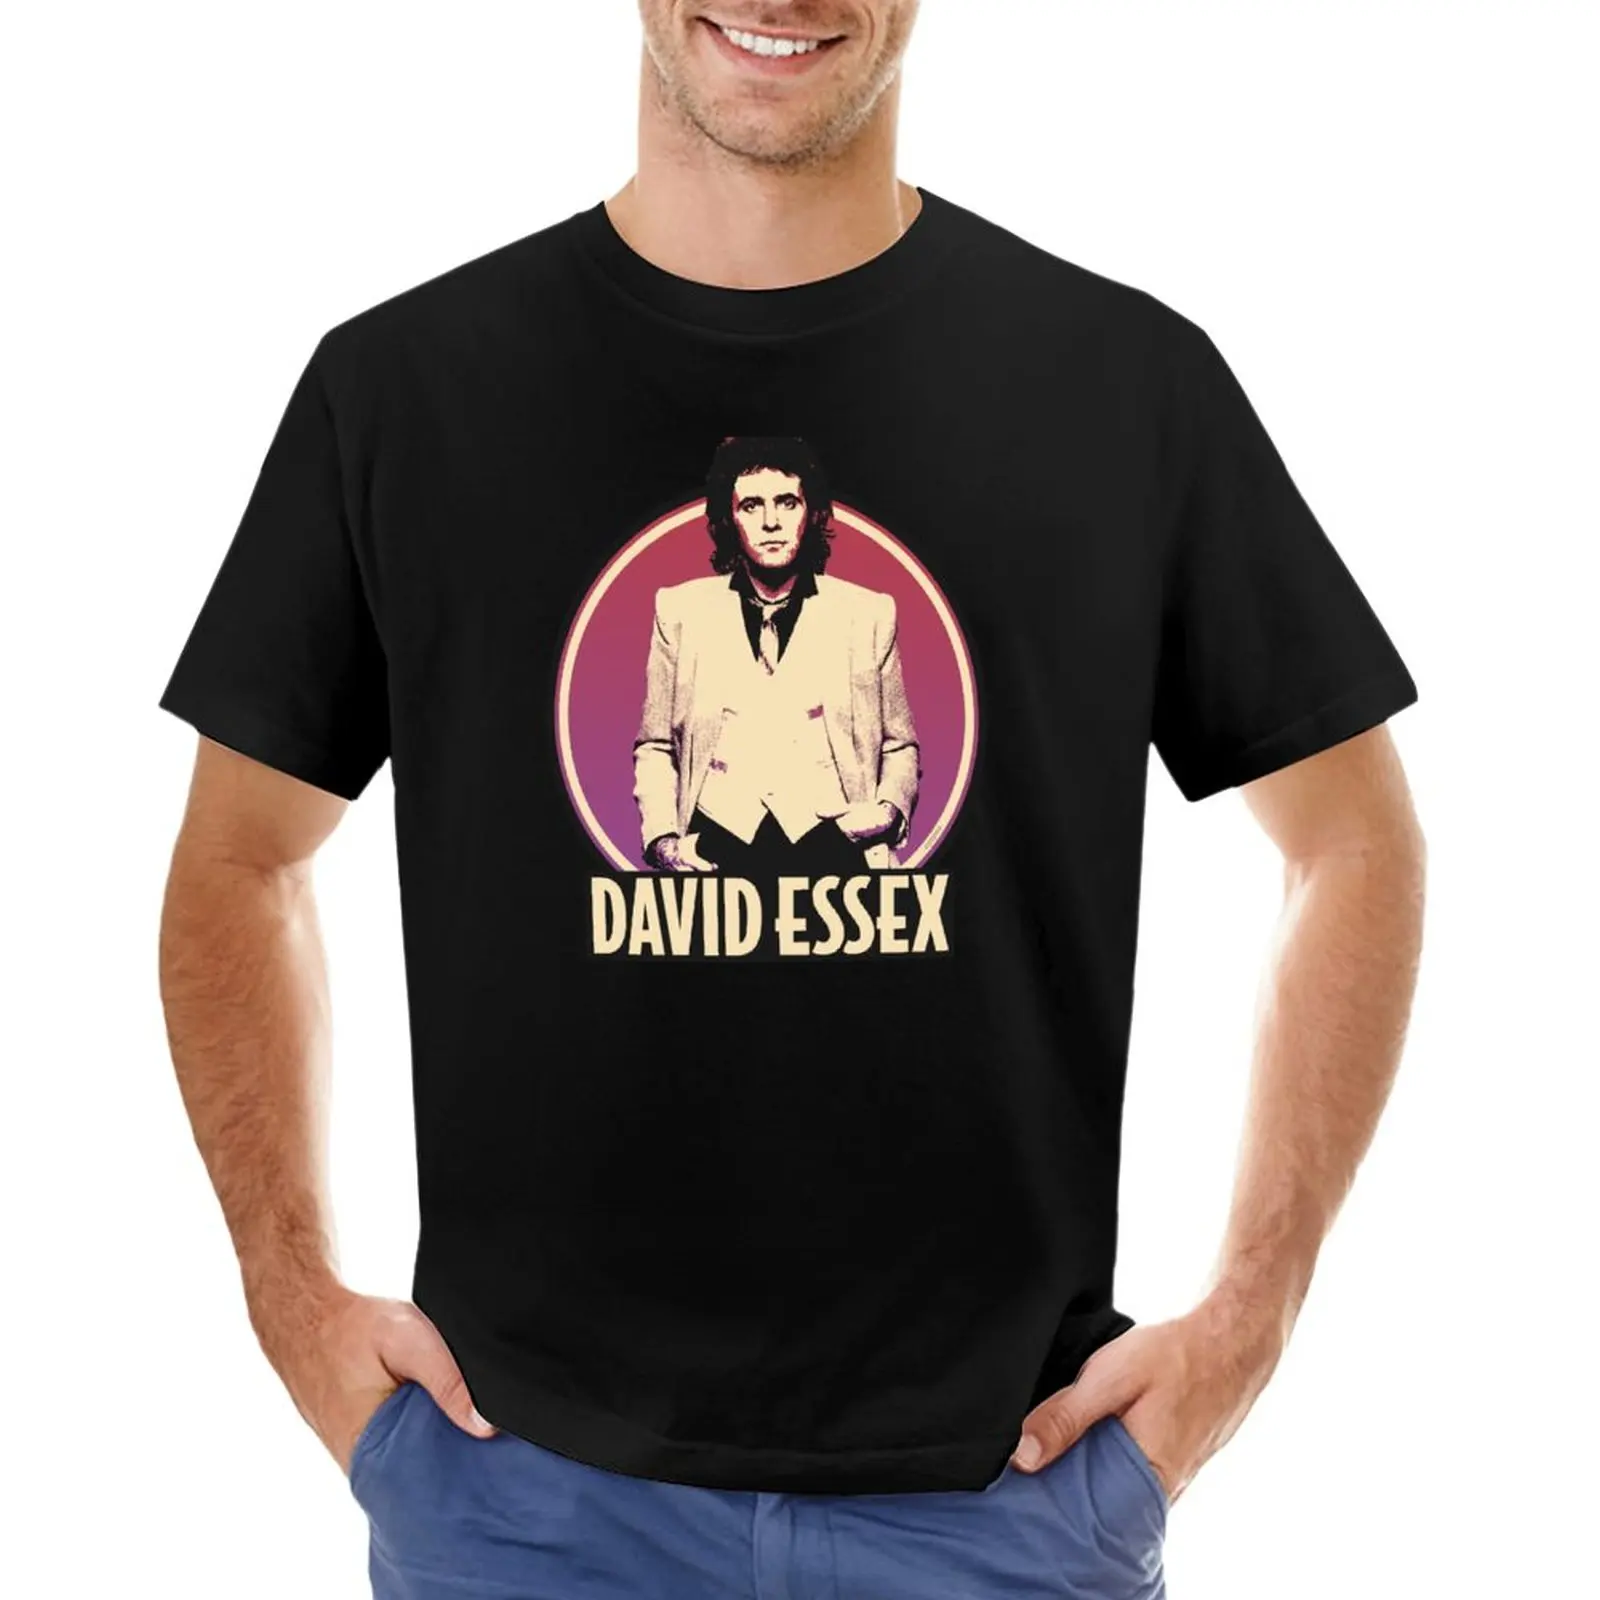 

Футболка David Essex в стиле поп-музыки 70-х, Мужская одежда, спортивные рубашки, эстетическая одежда, футболка для мужчин